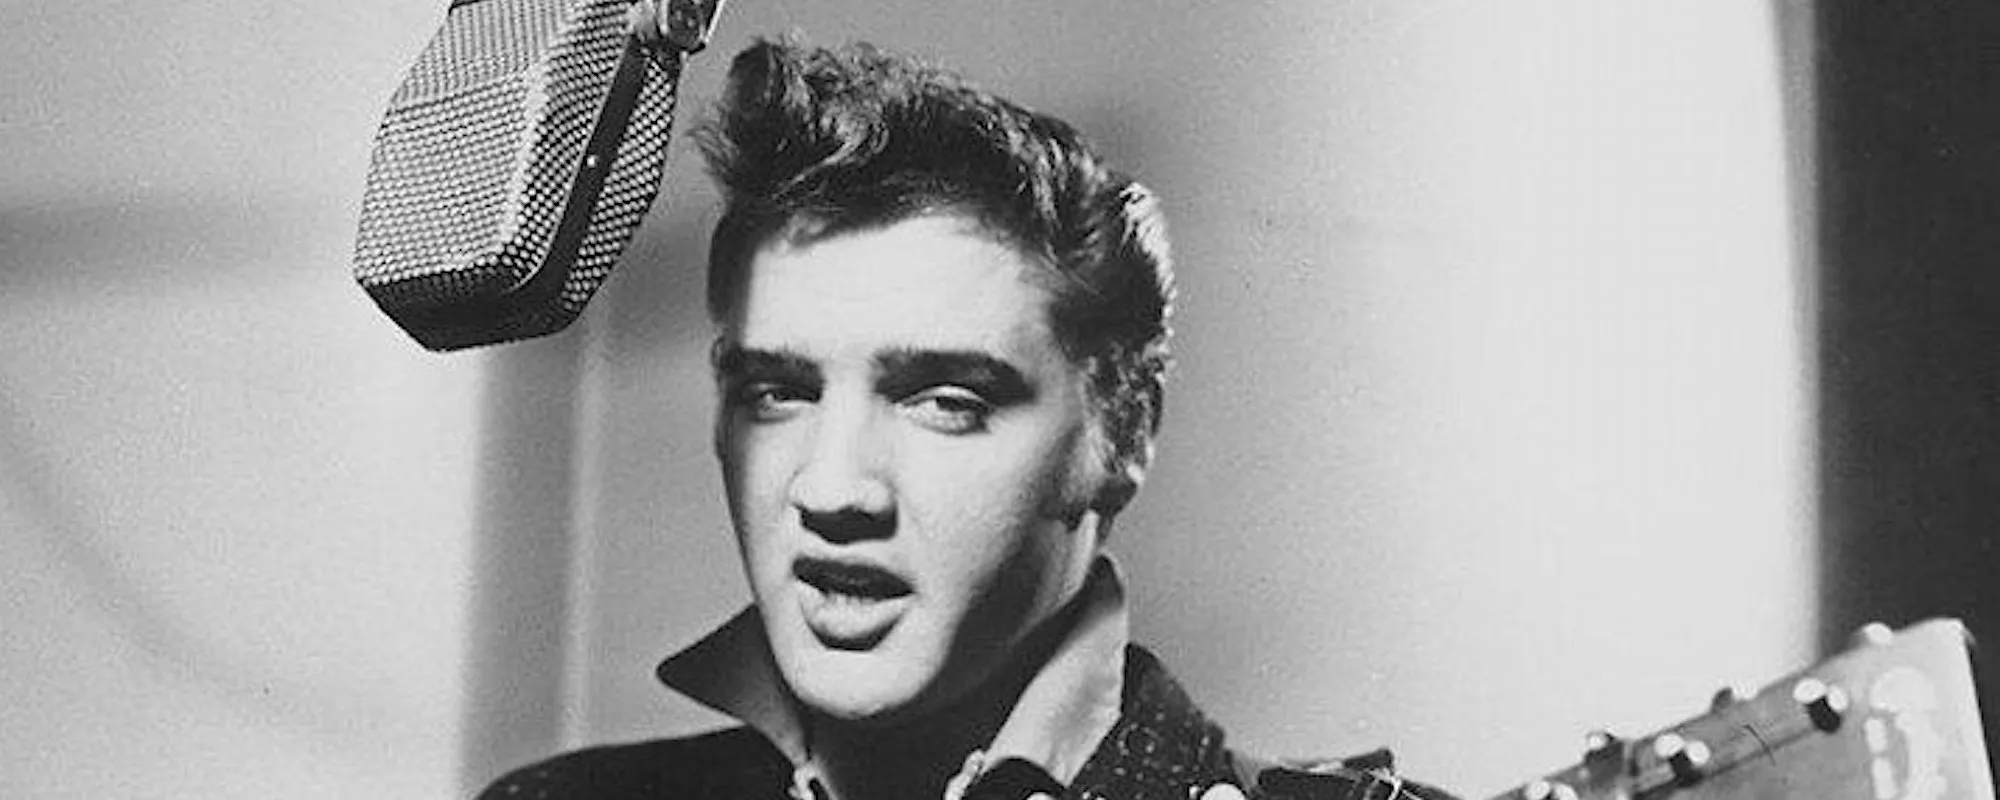 Universal to Represent Elvis Presley’s Song Catalog